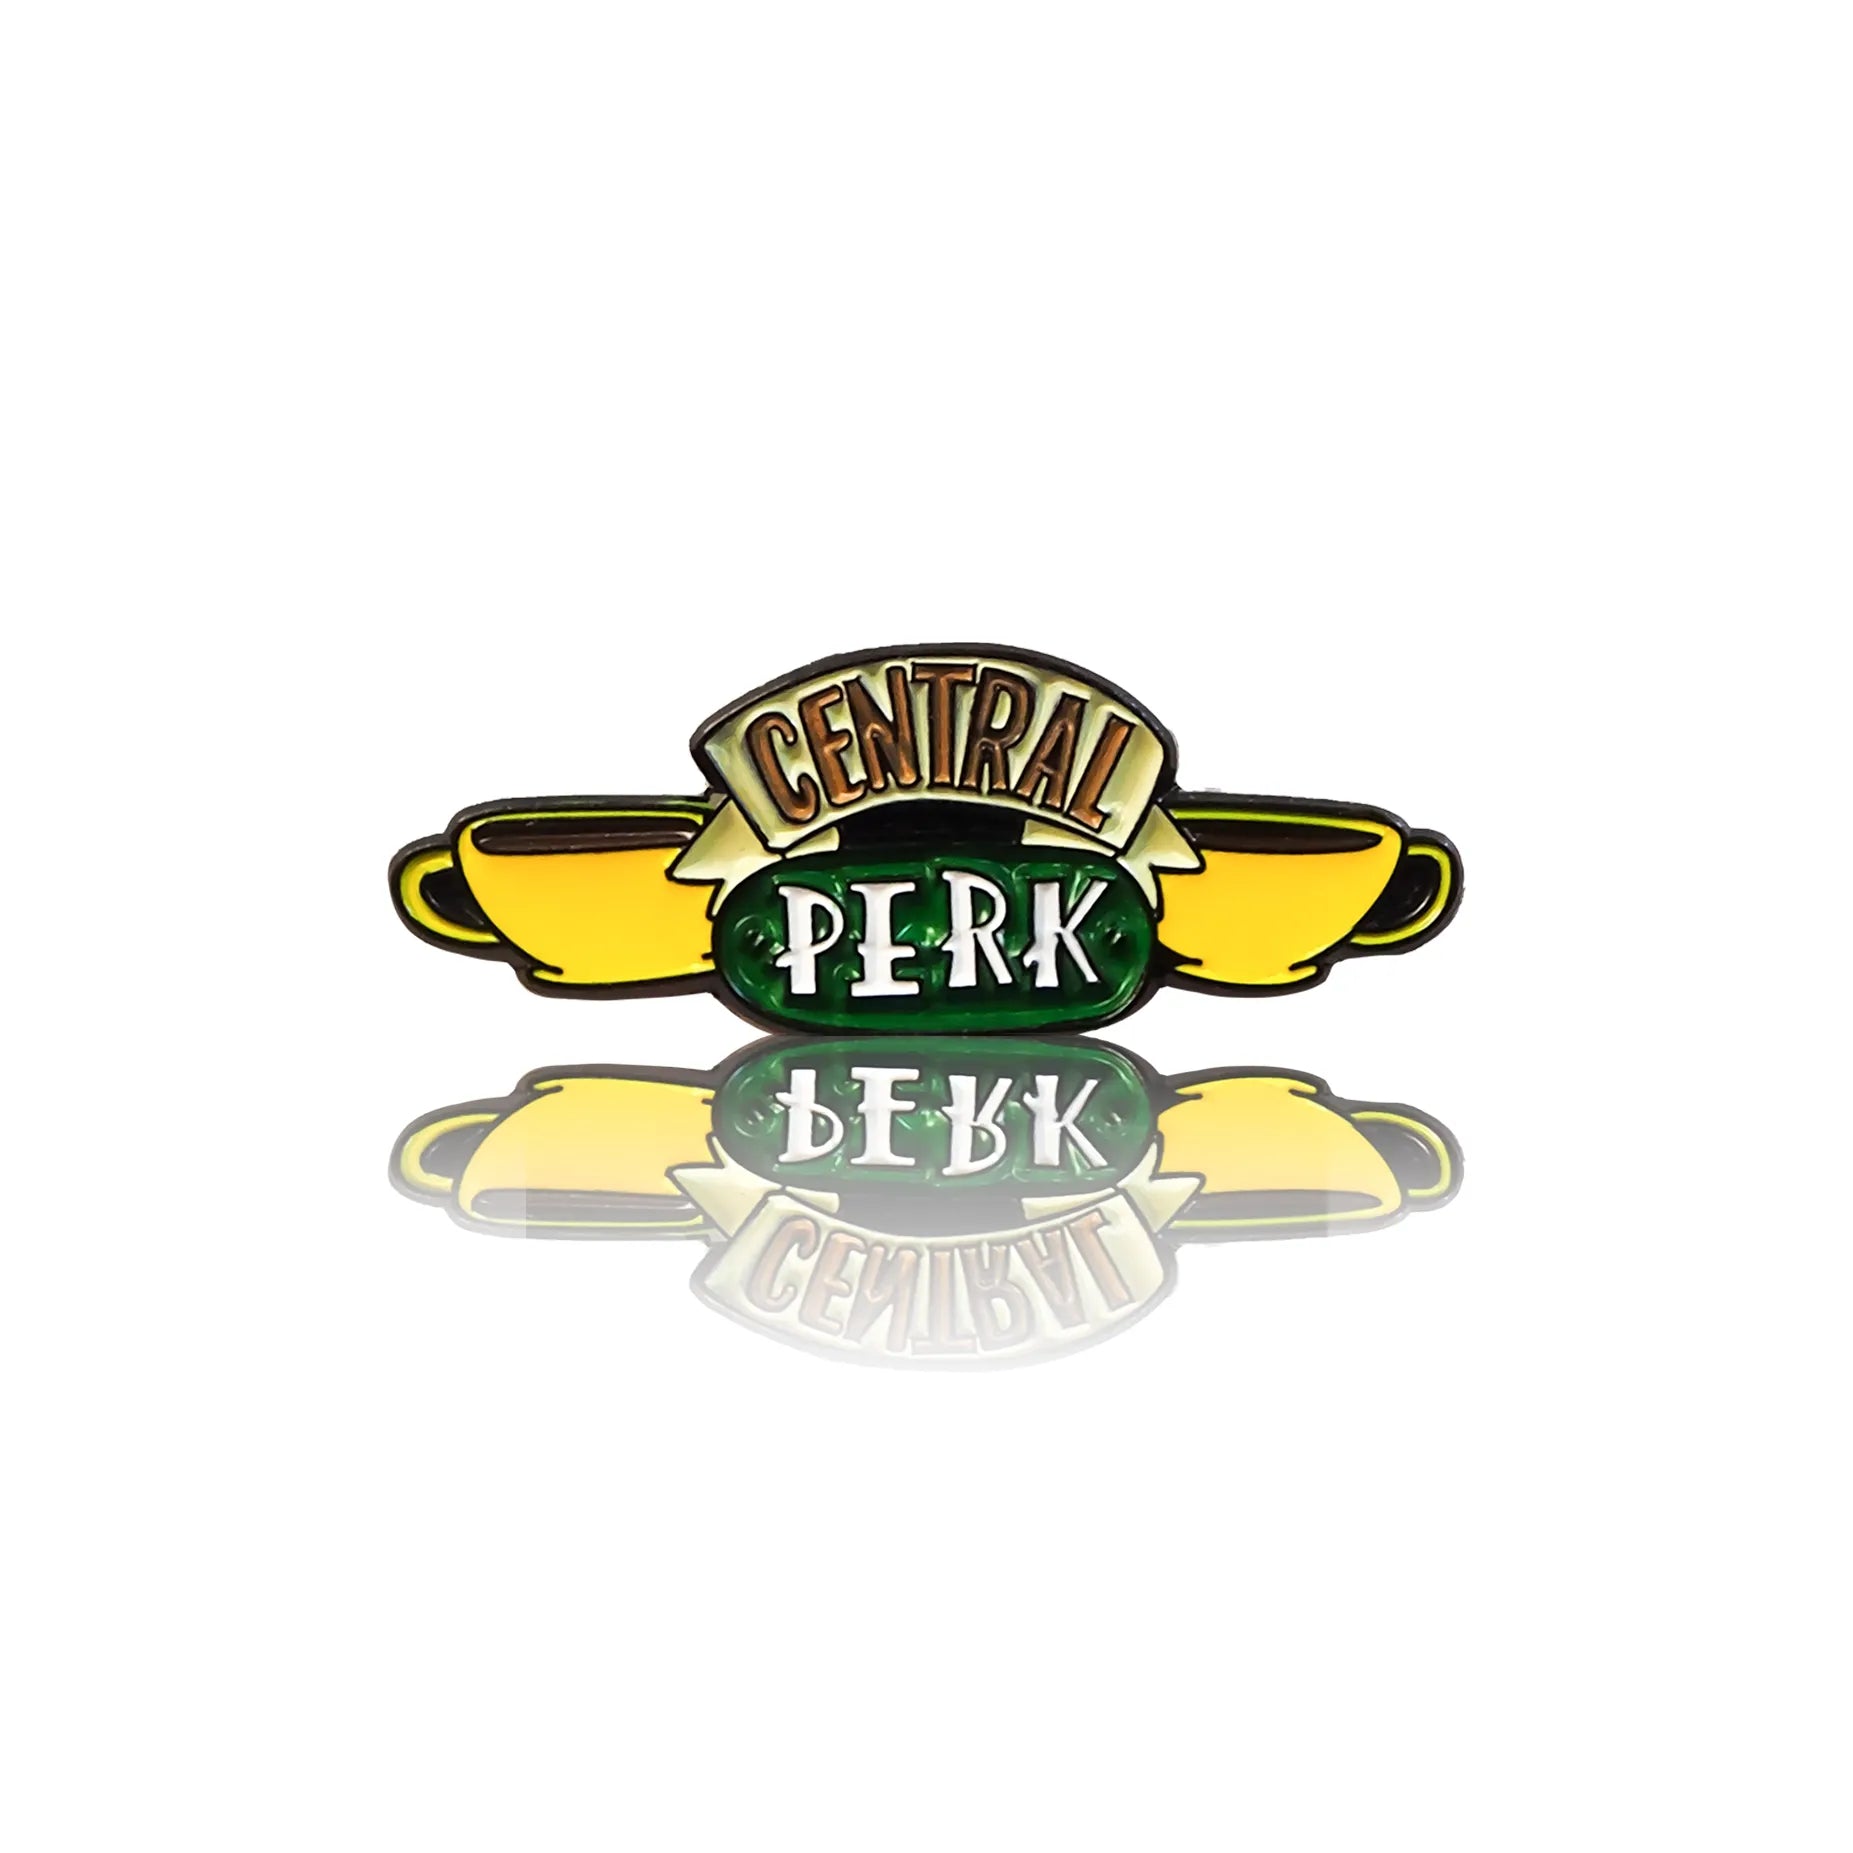  logo kawiarni "Central Perk" z serialu f.r.i.e.n.d.s